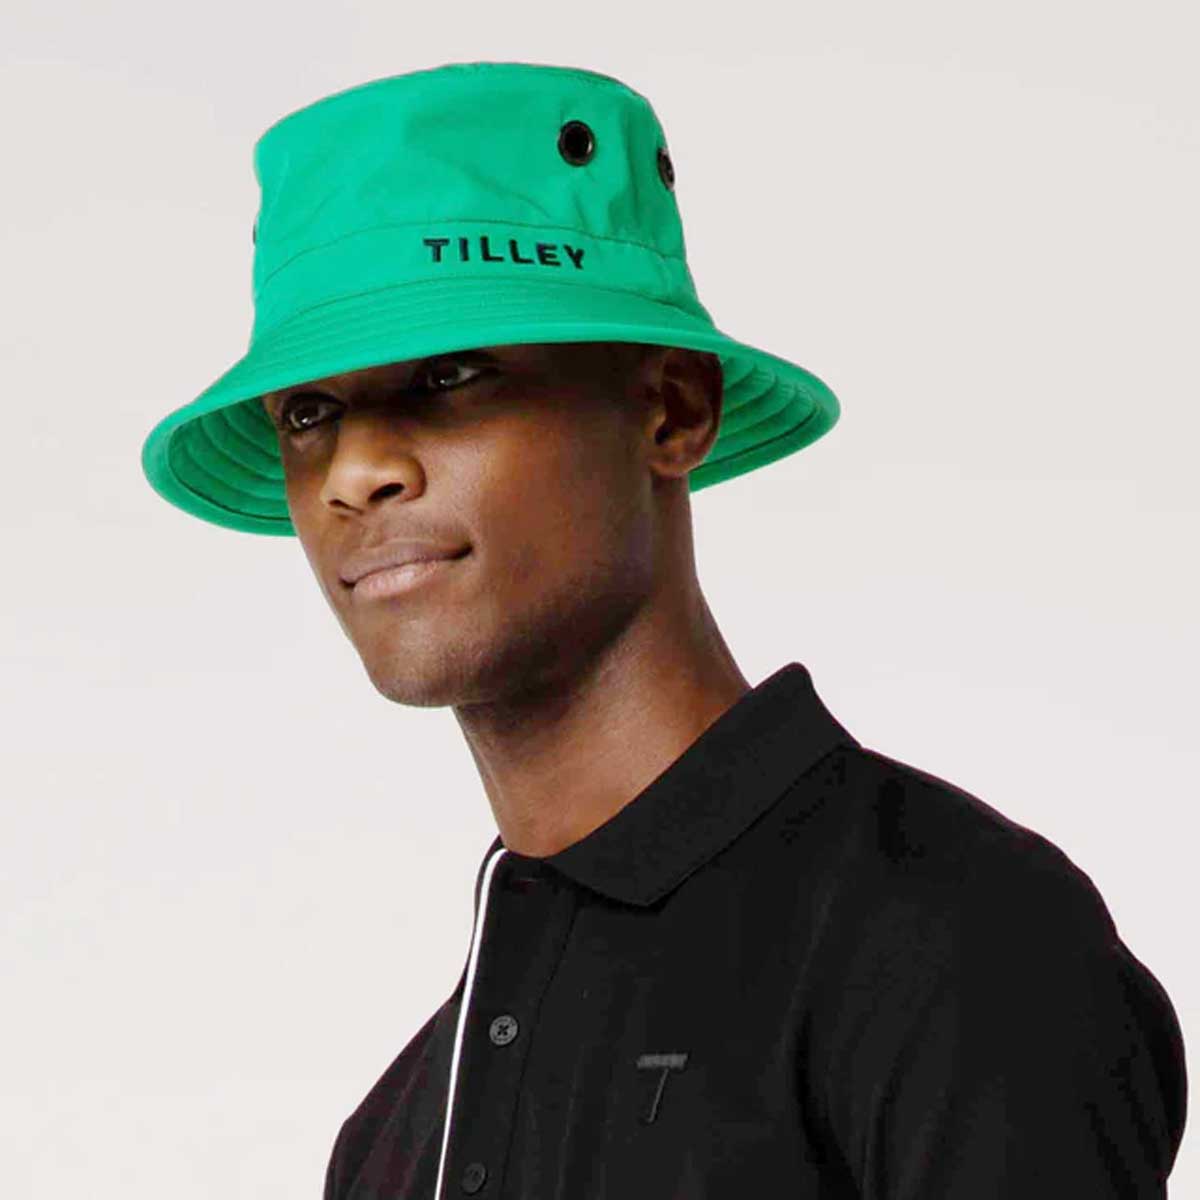 TILLEY Golf Bucket Hat - Green